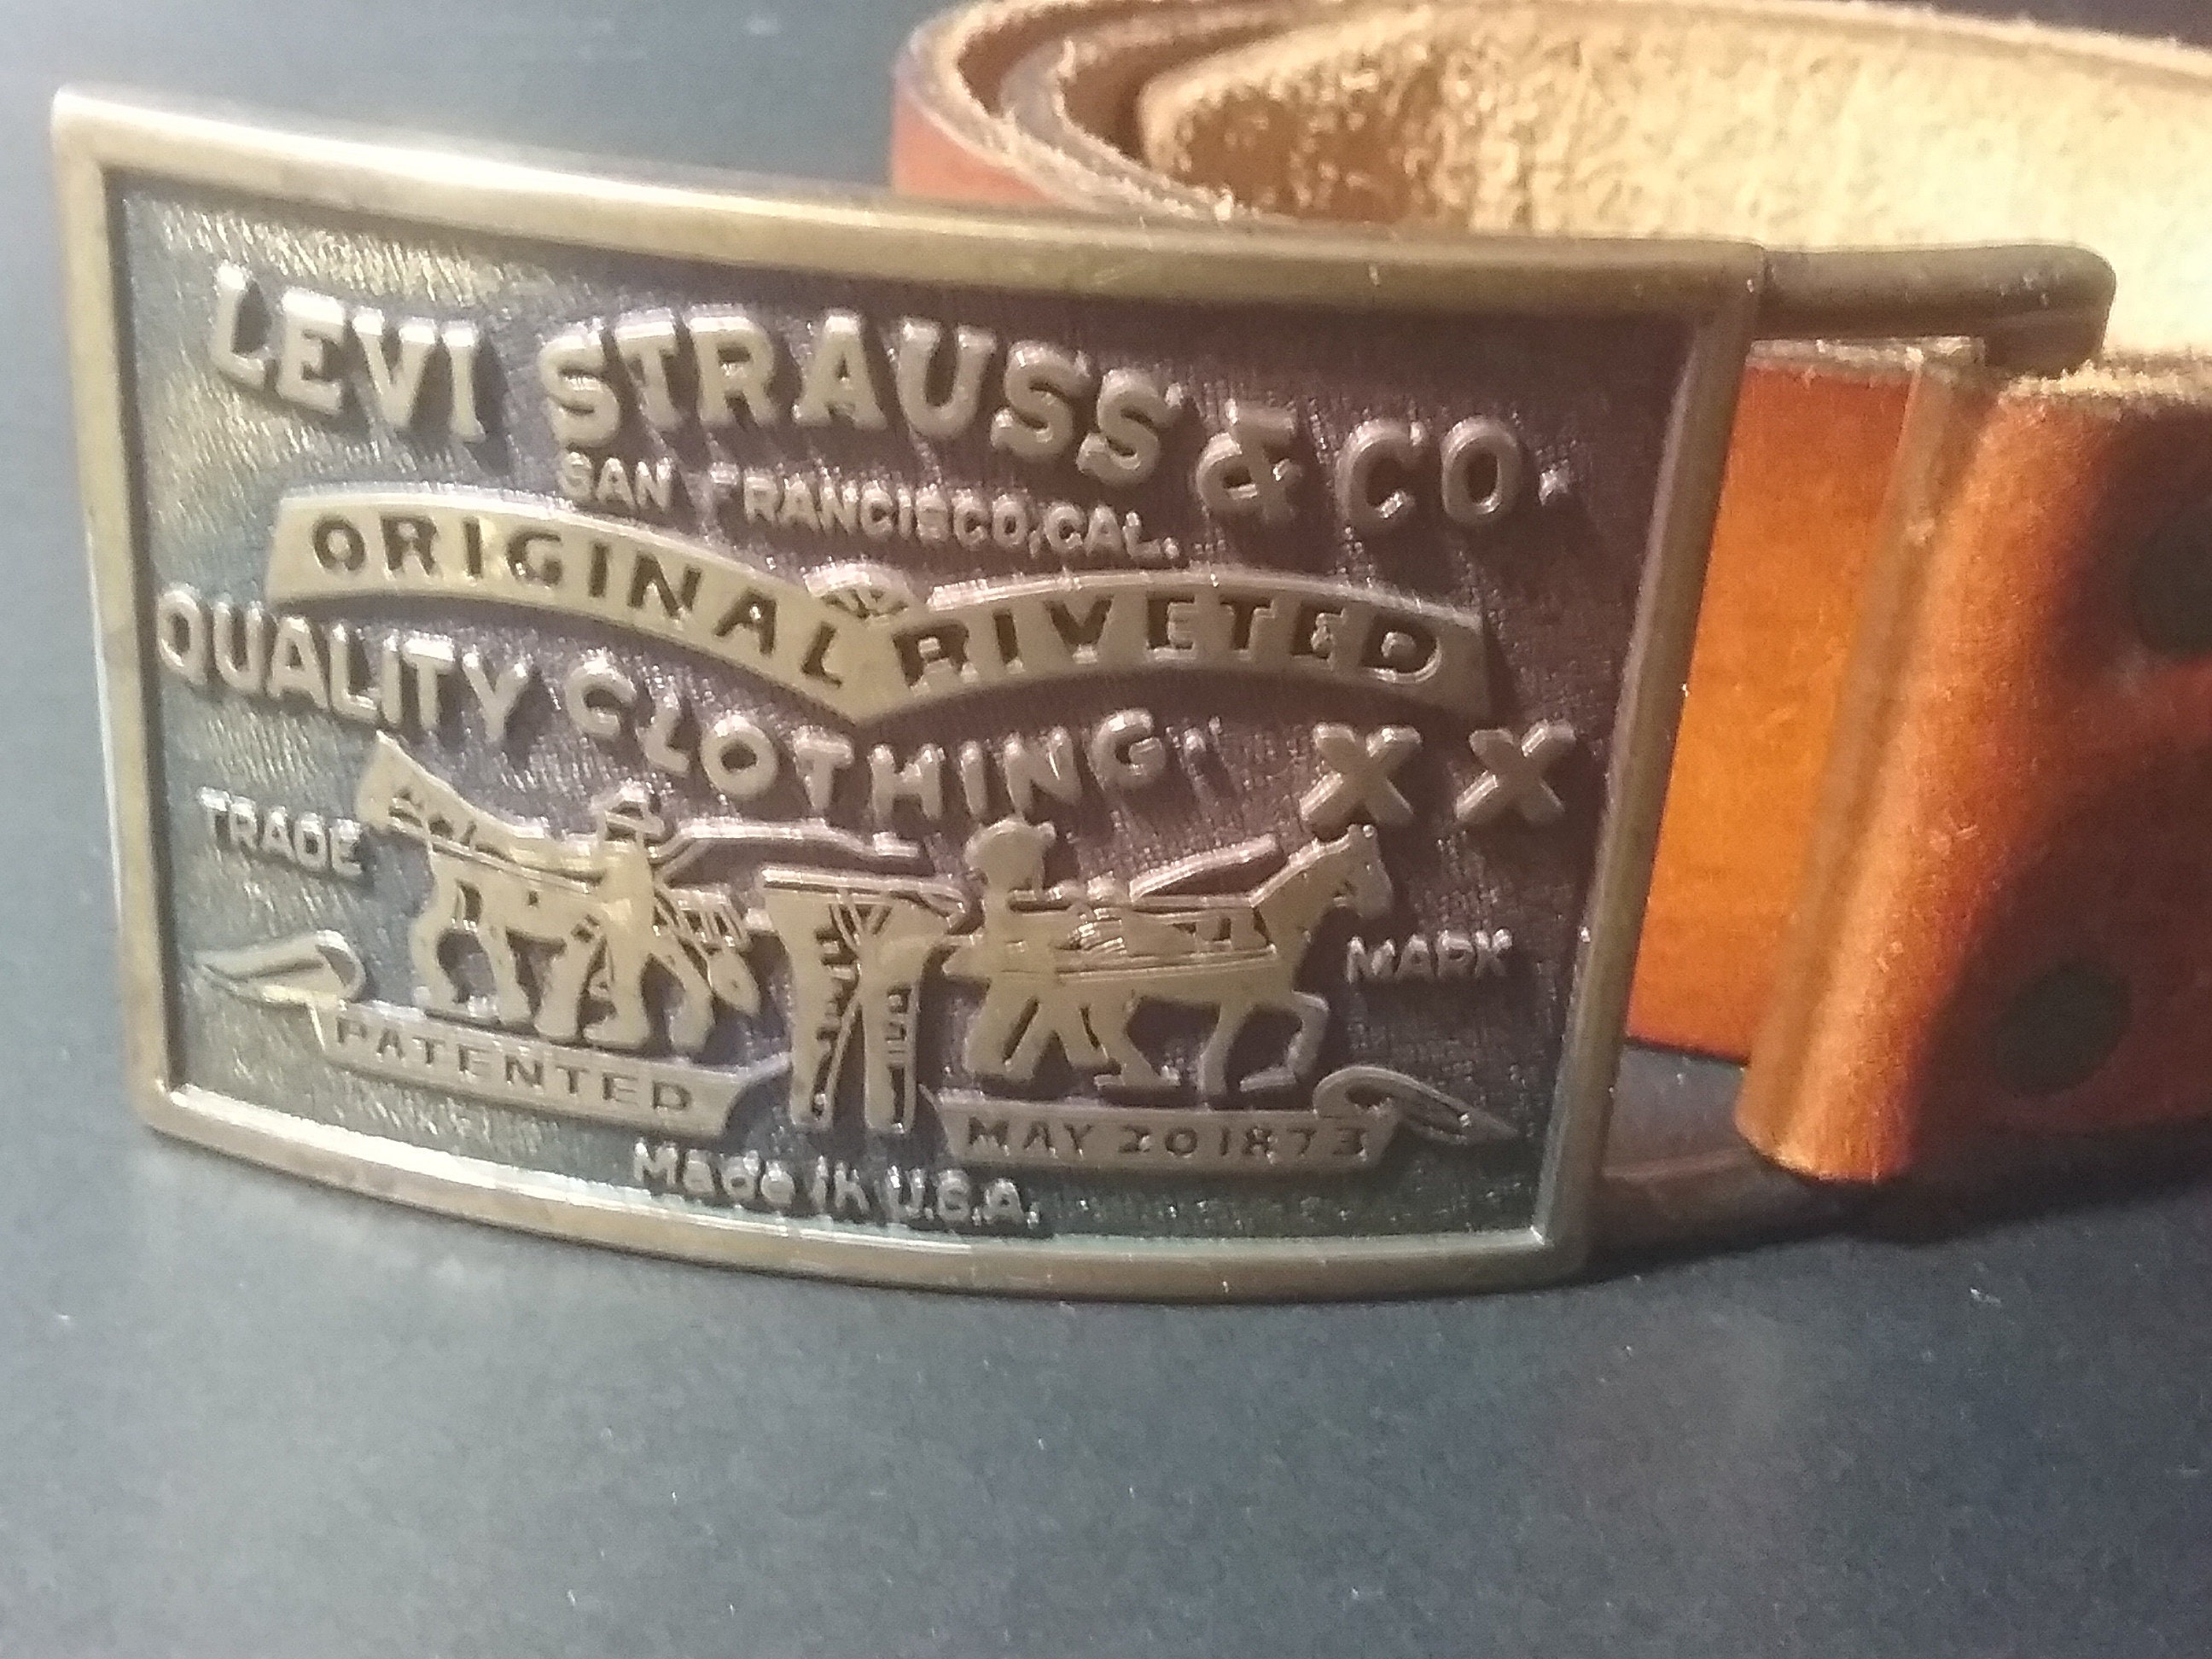 Vintage Levi's Belt and Buckle - Etsy UK